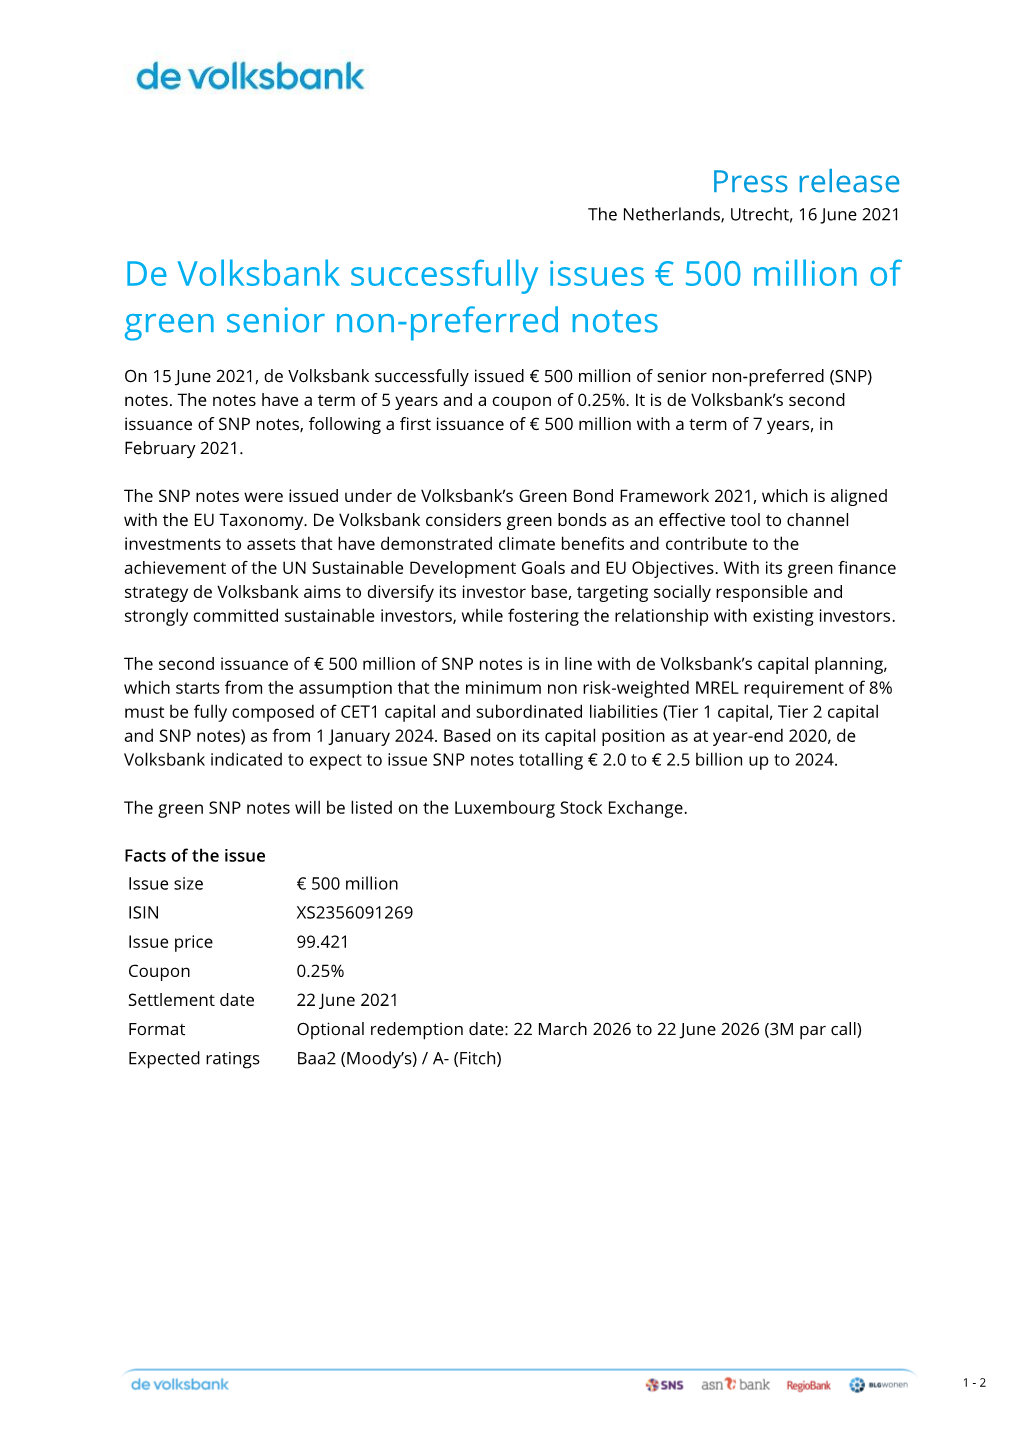 Press Release the Netherlands, Utrecht, 16 June 2021